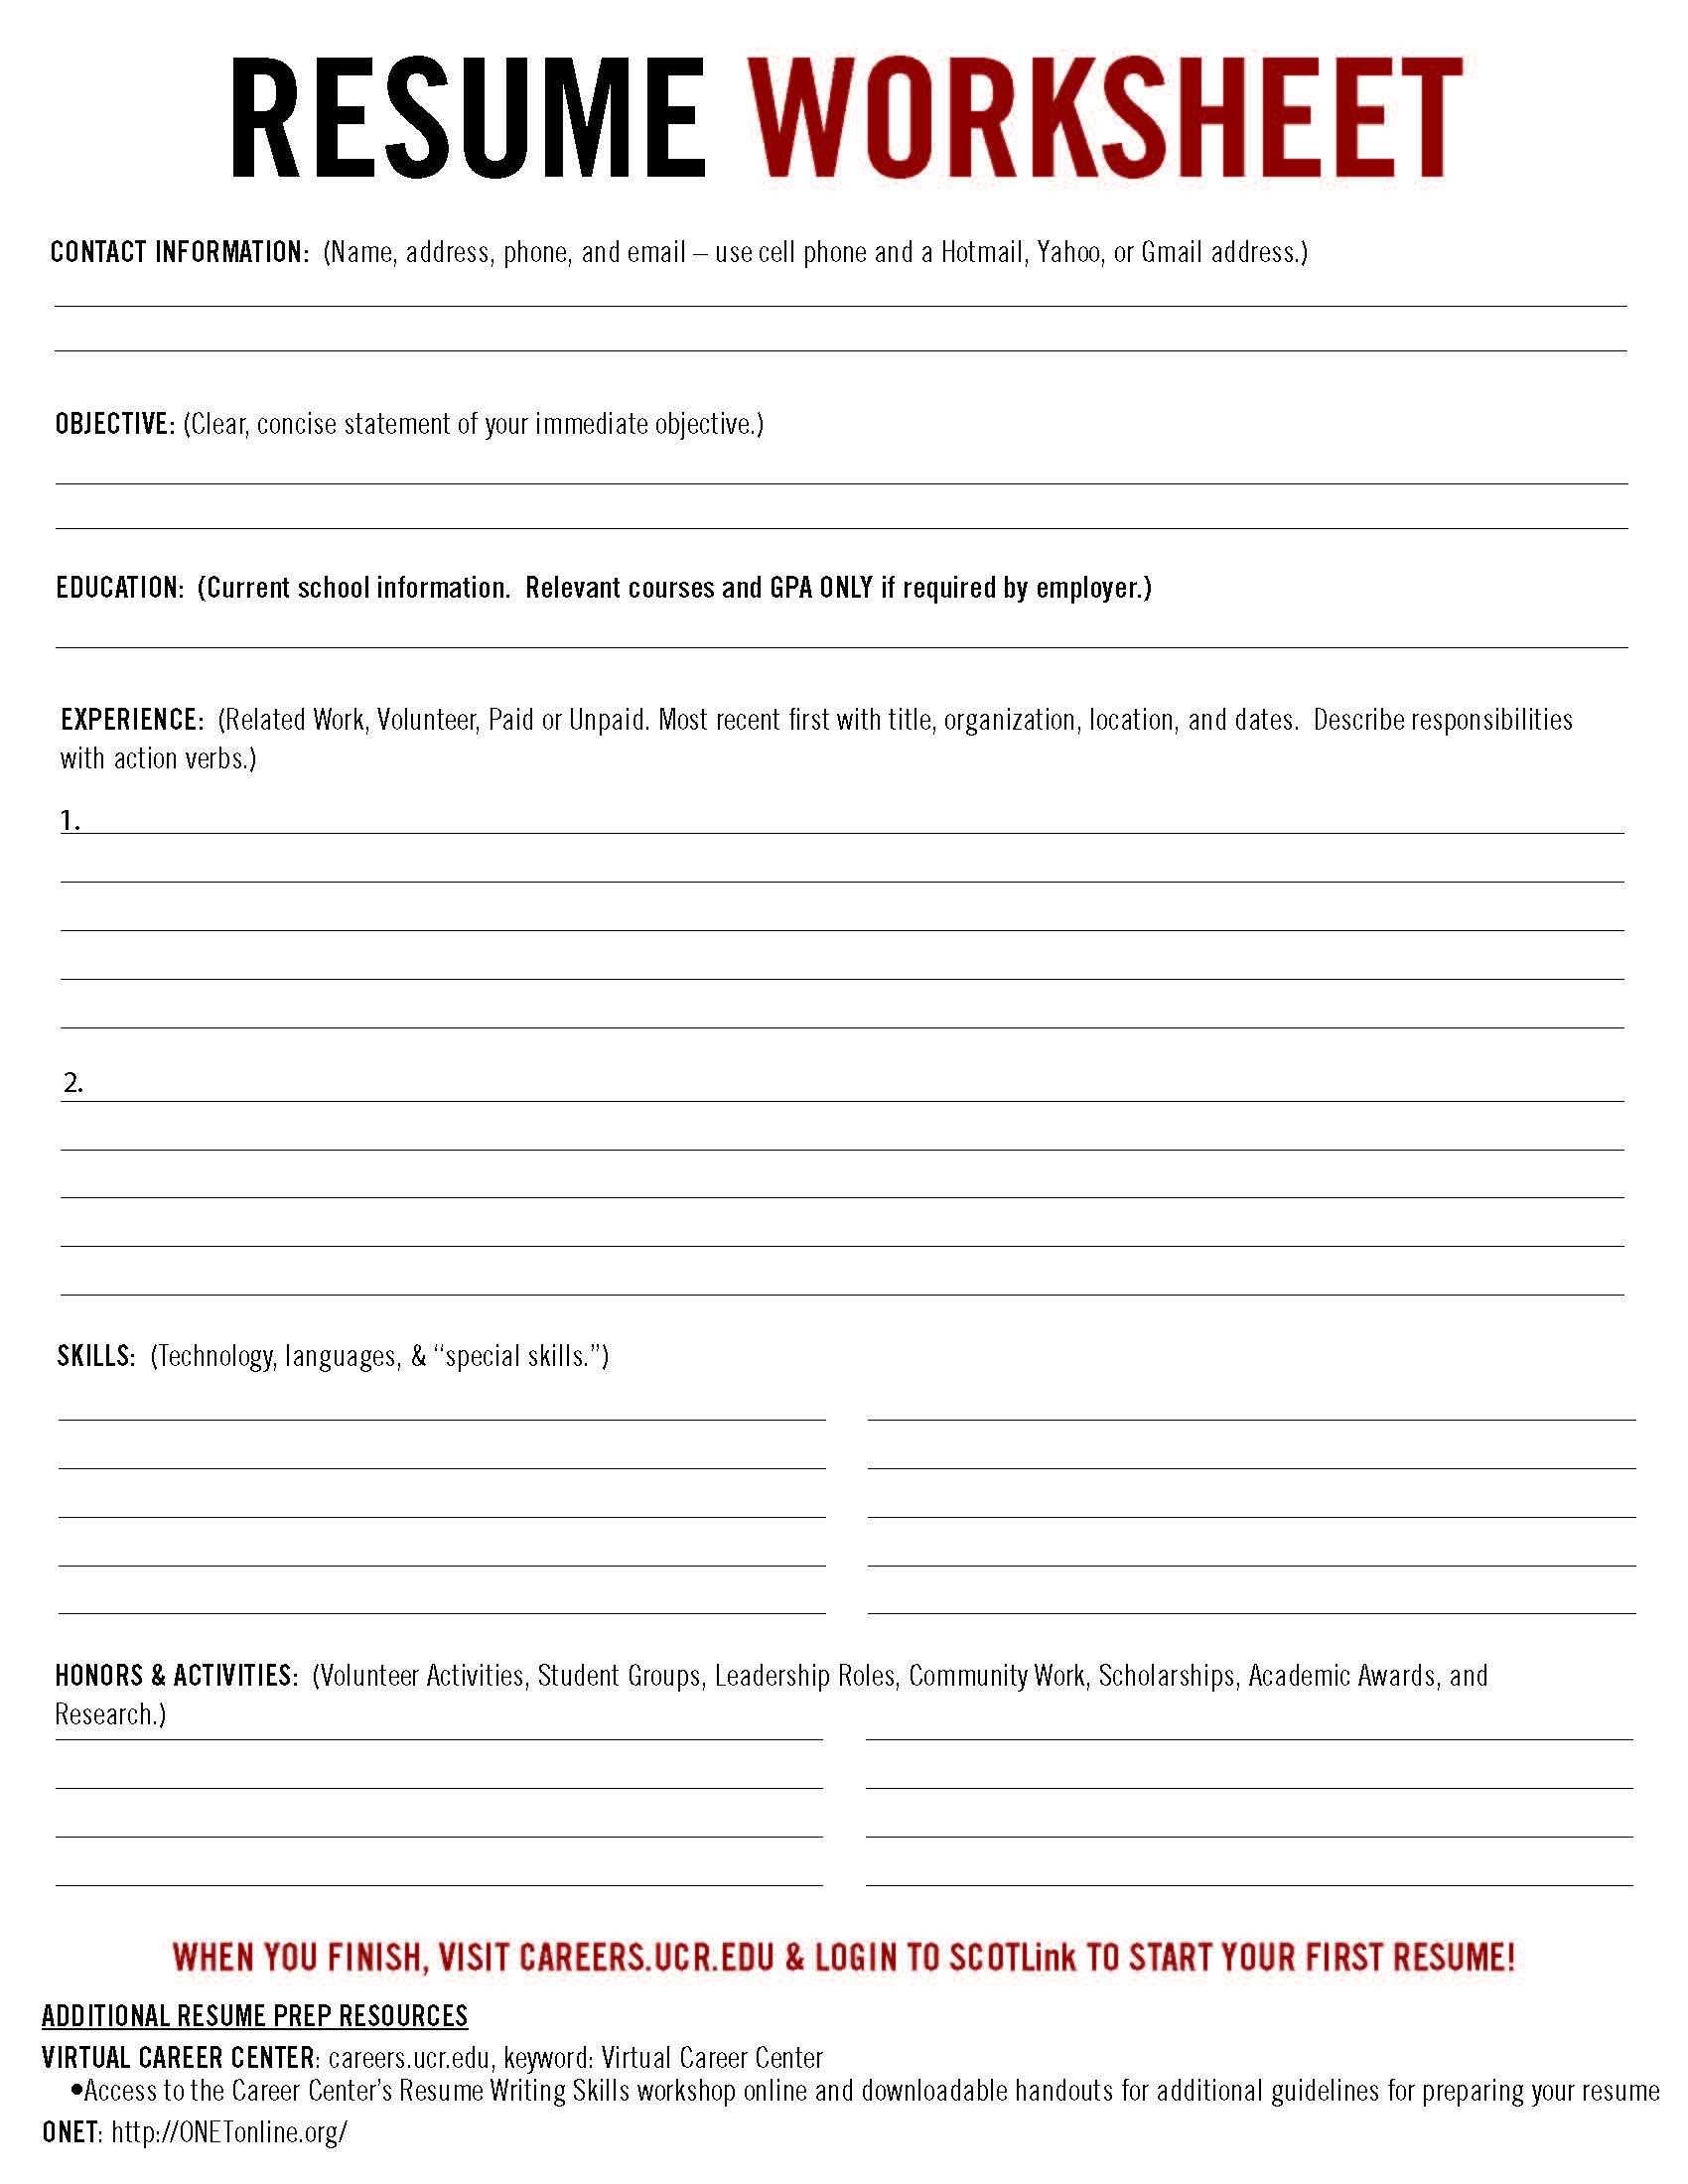 Career Worksheets for Middle School with Resume Pt 2 Career Center Resources Pinterest